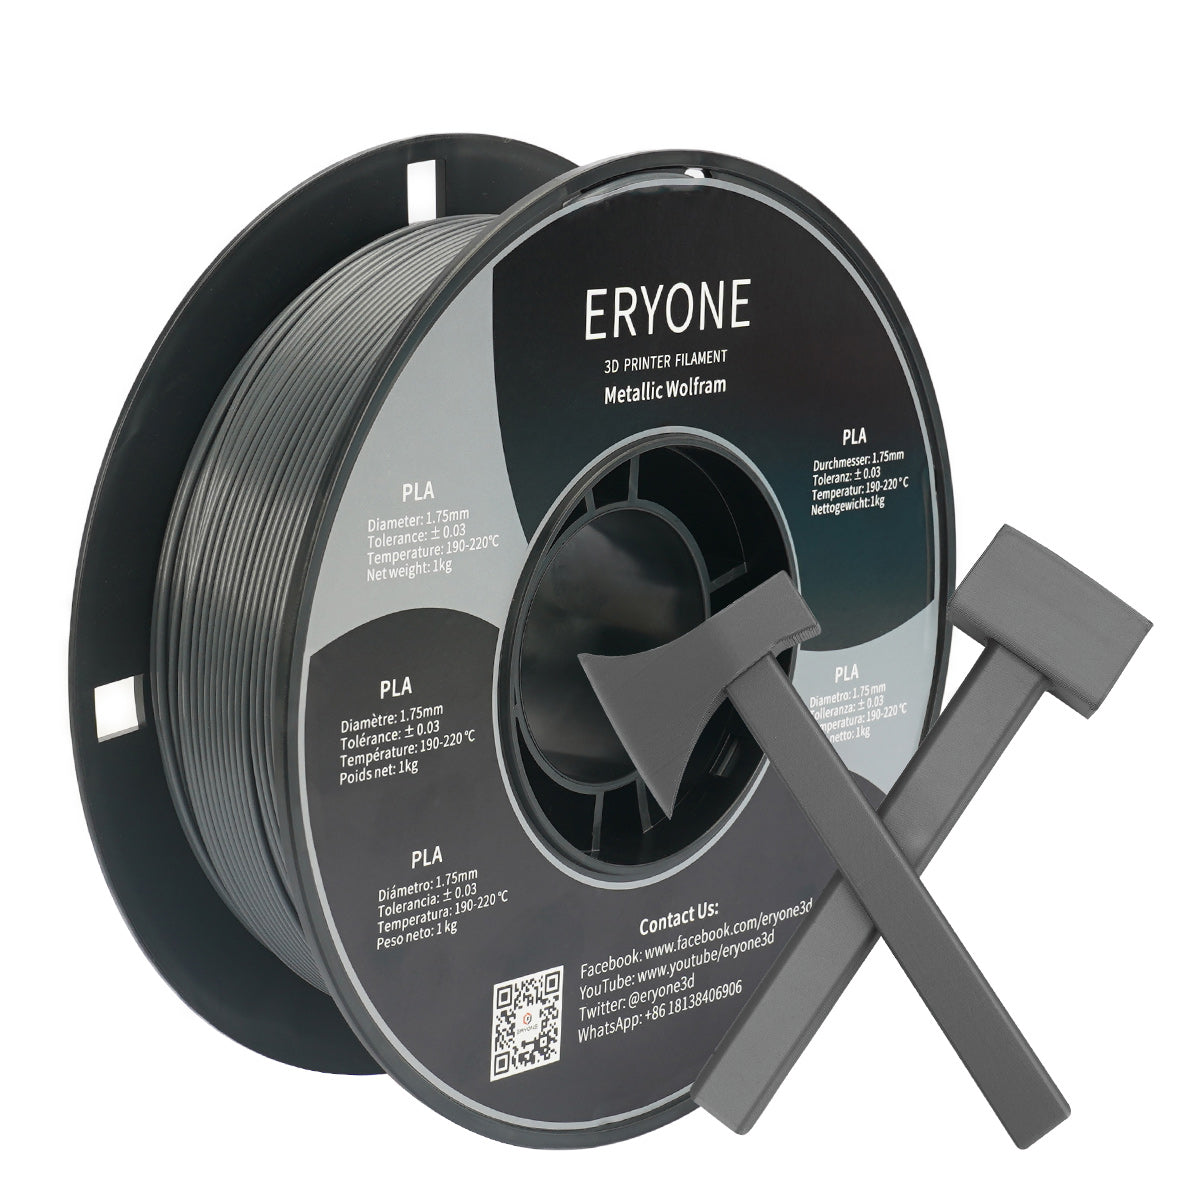 Pre-sale ERYONE Metallic PLA Filament 1.75mm, 3D Printer Filament Metal PLA, +/-0.03mm, 1kg(2.2lbs)/Spool, Stainless Steel